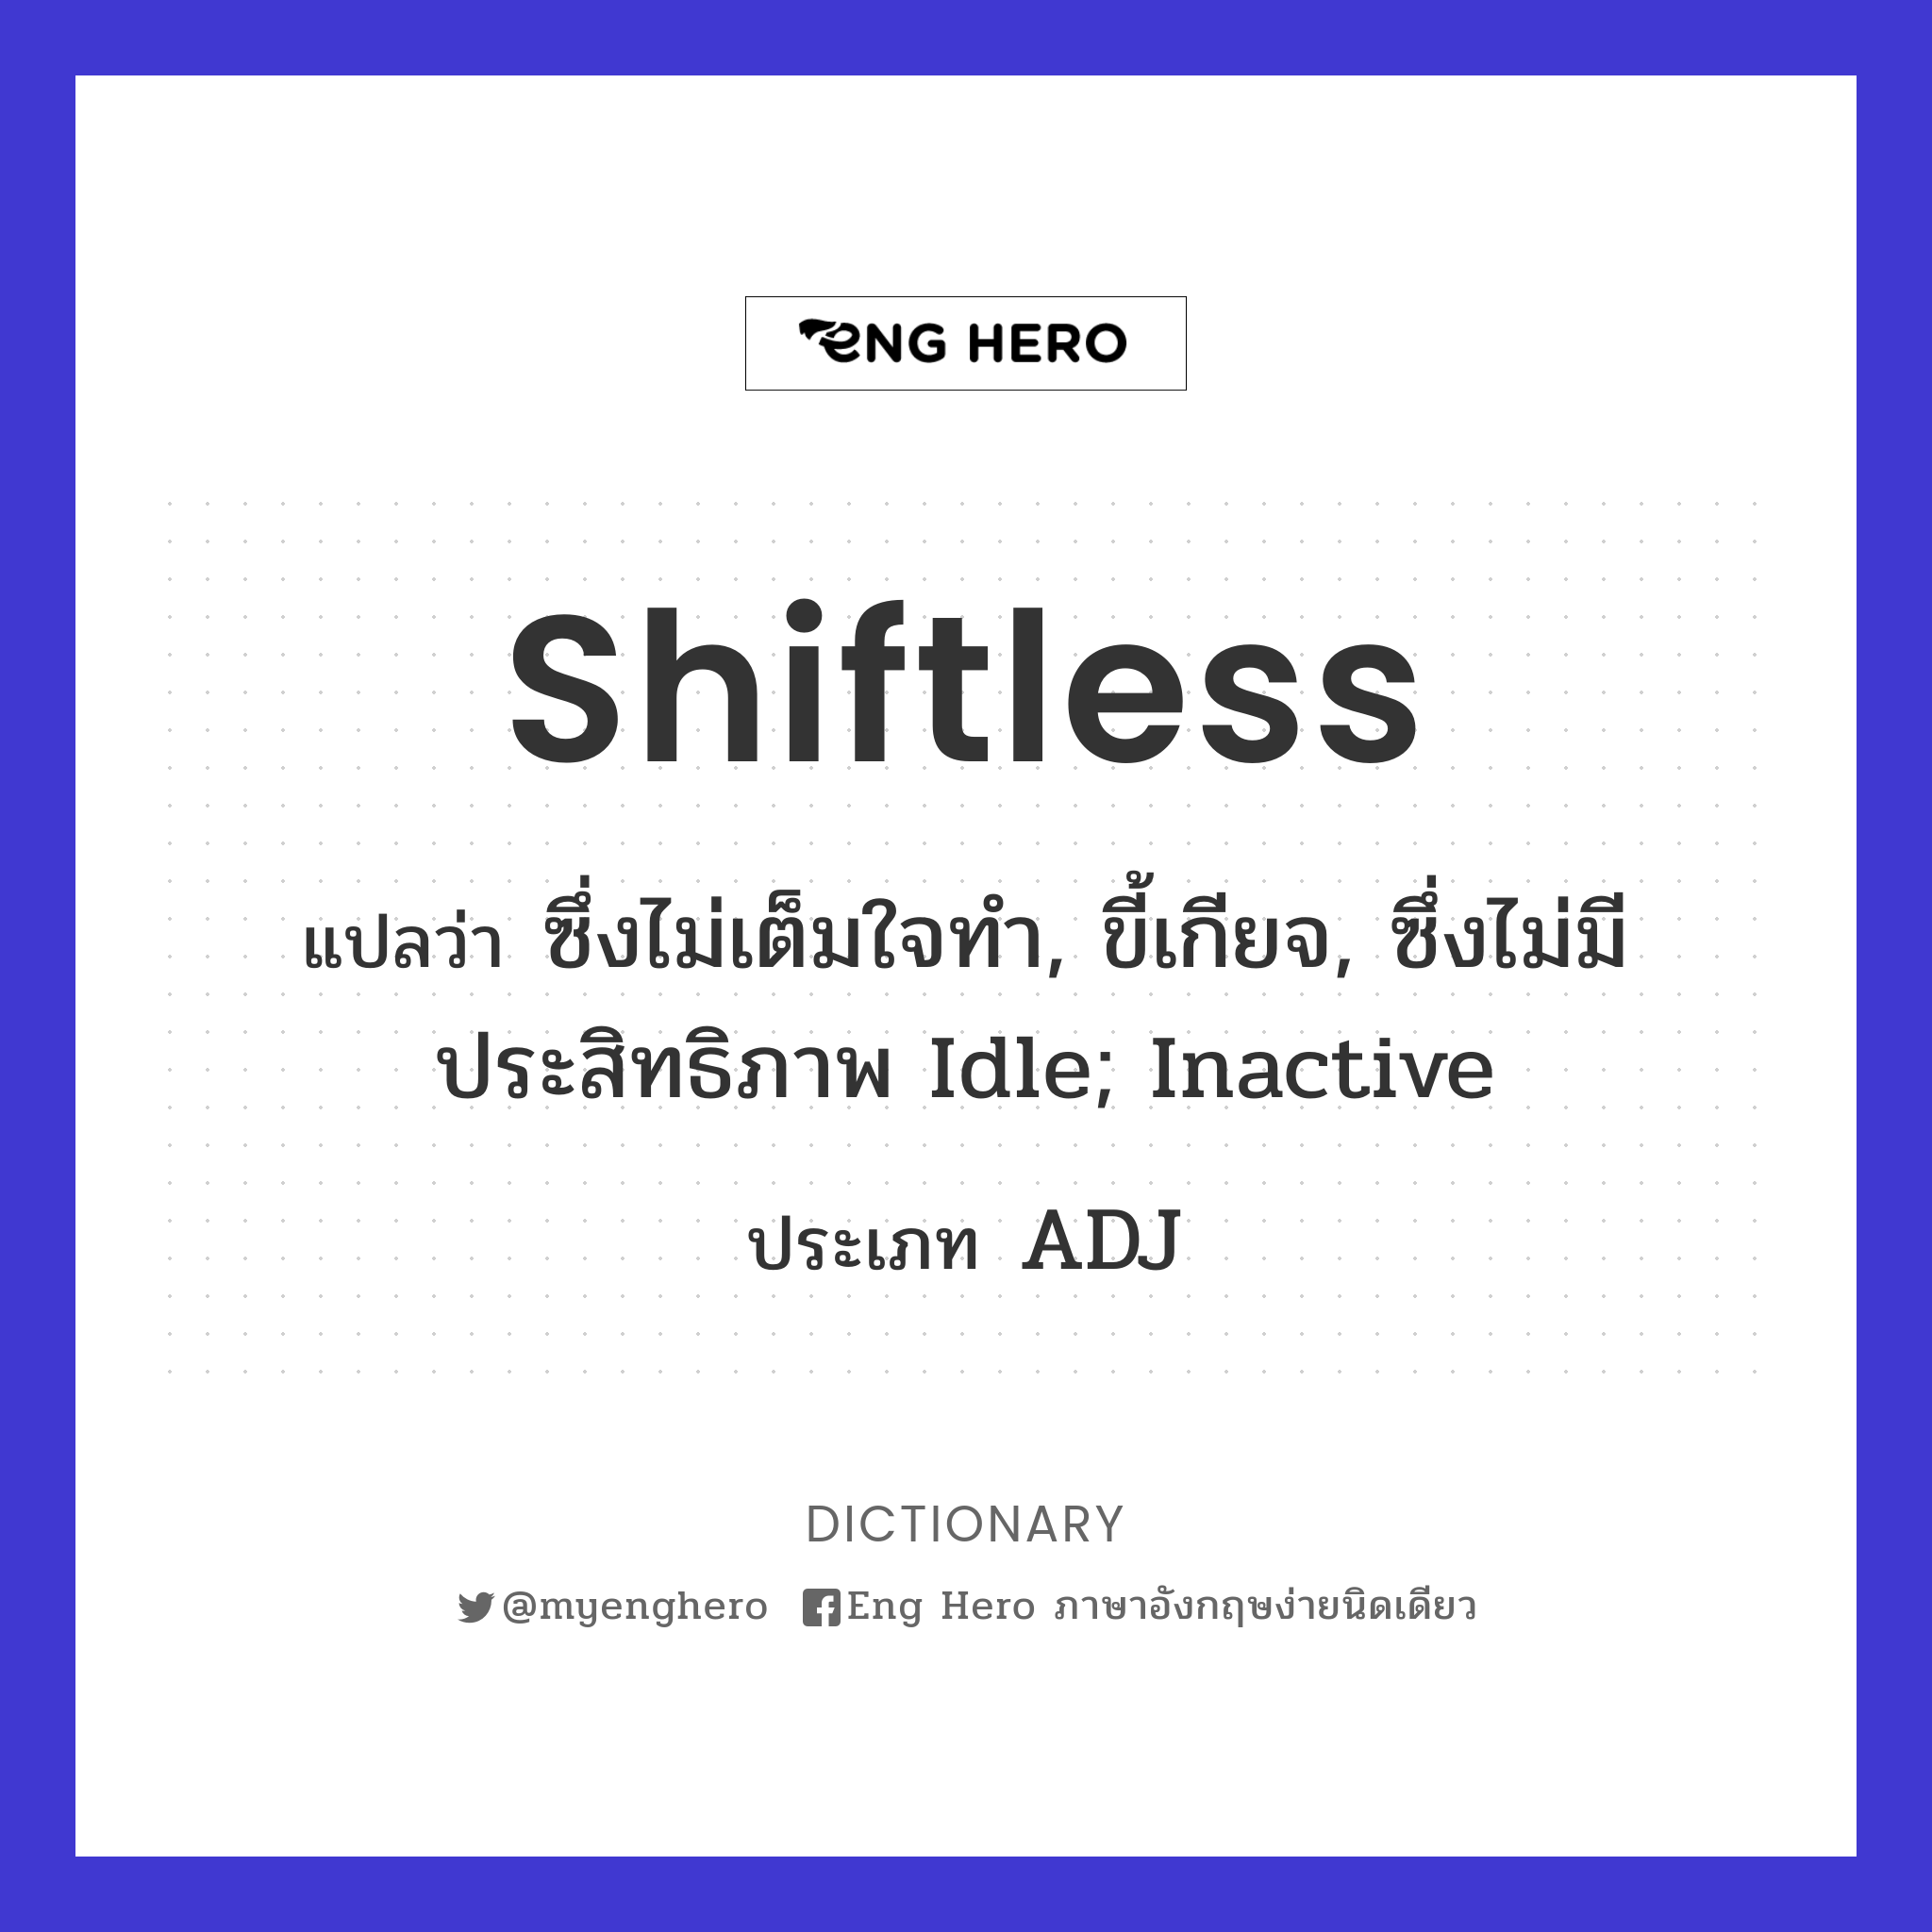 shiftless